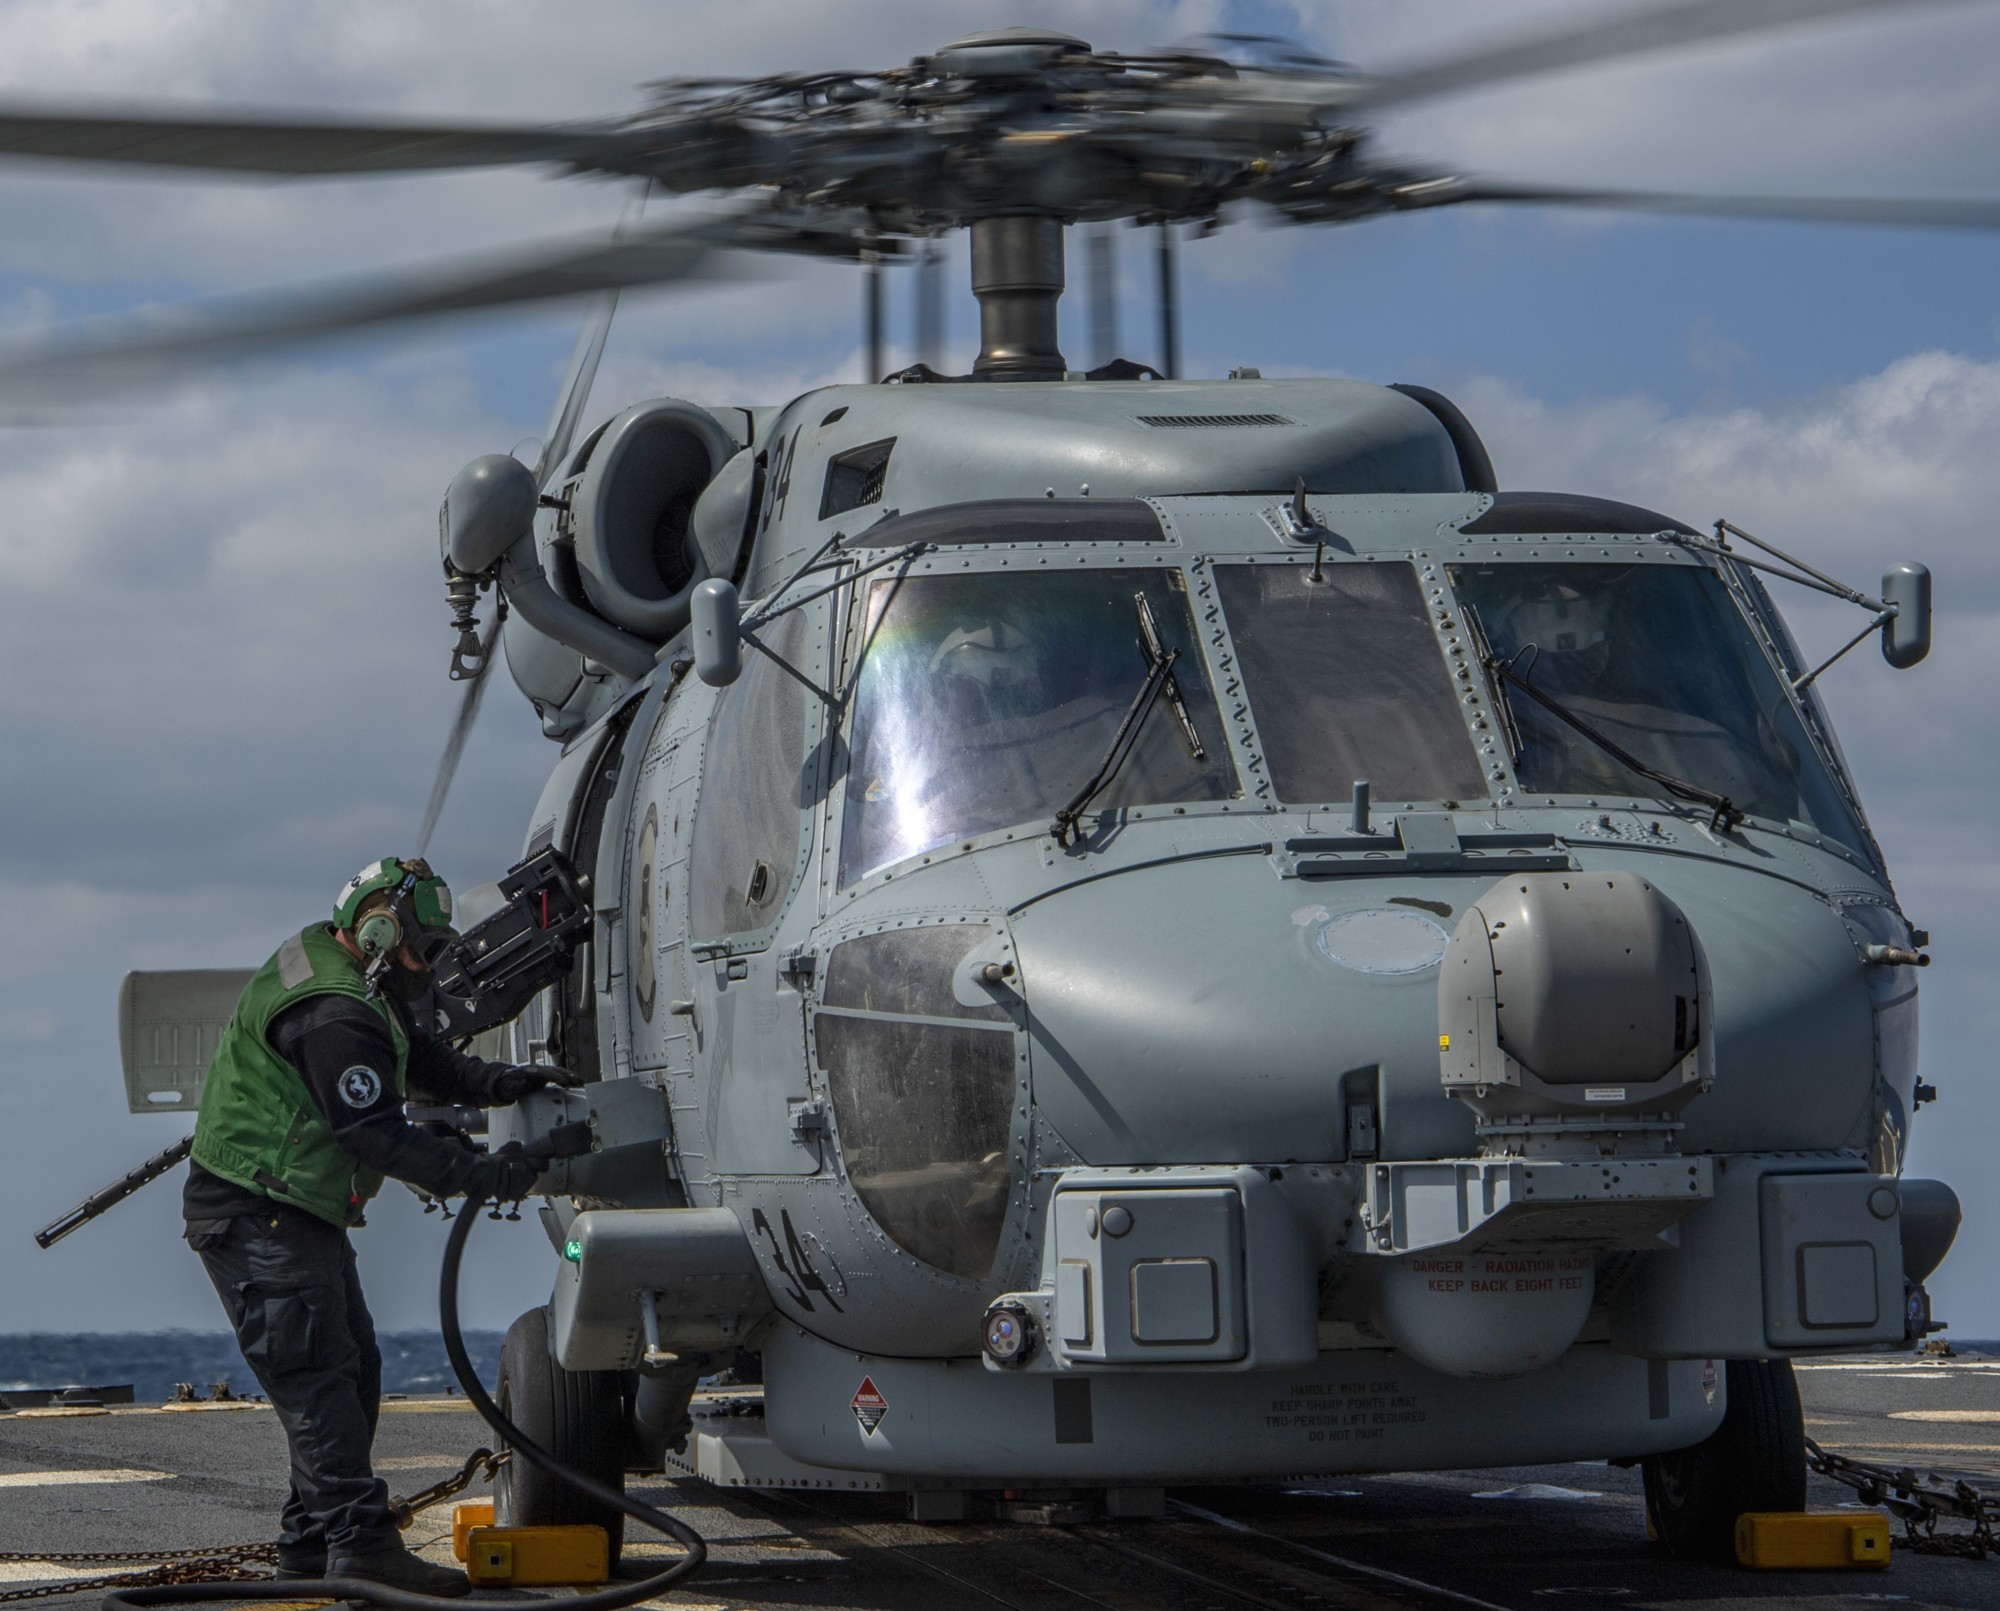 hsm-35 magicians helicopter maritime strike squadron us navy mh-60r seahawk uss john finn ddg-113 58